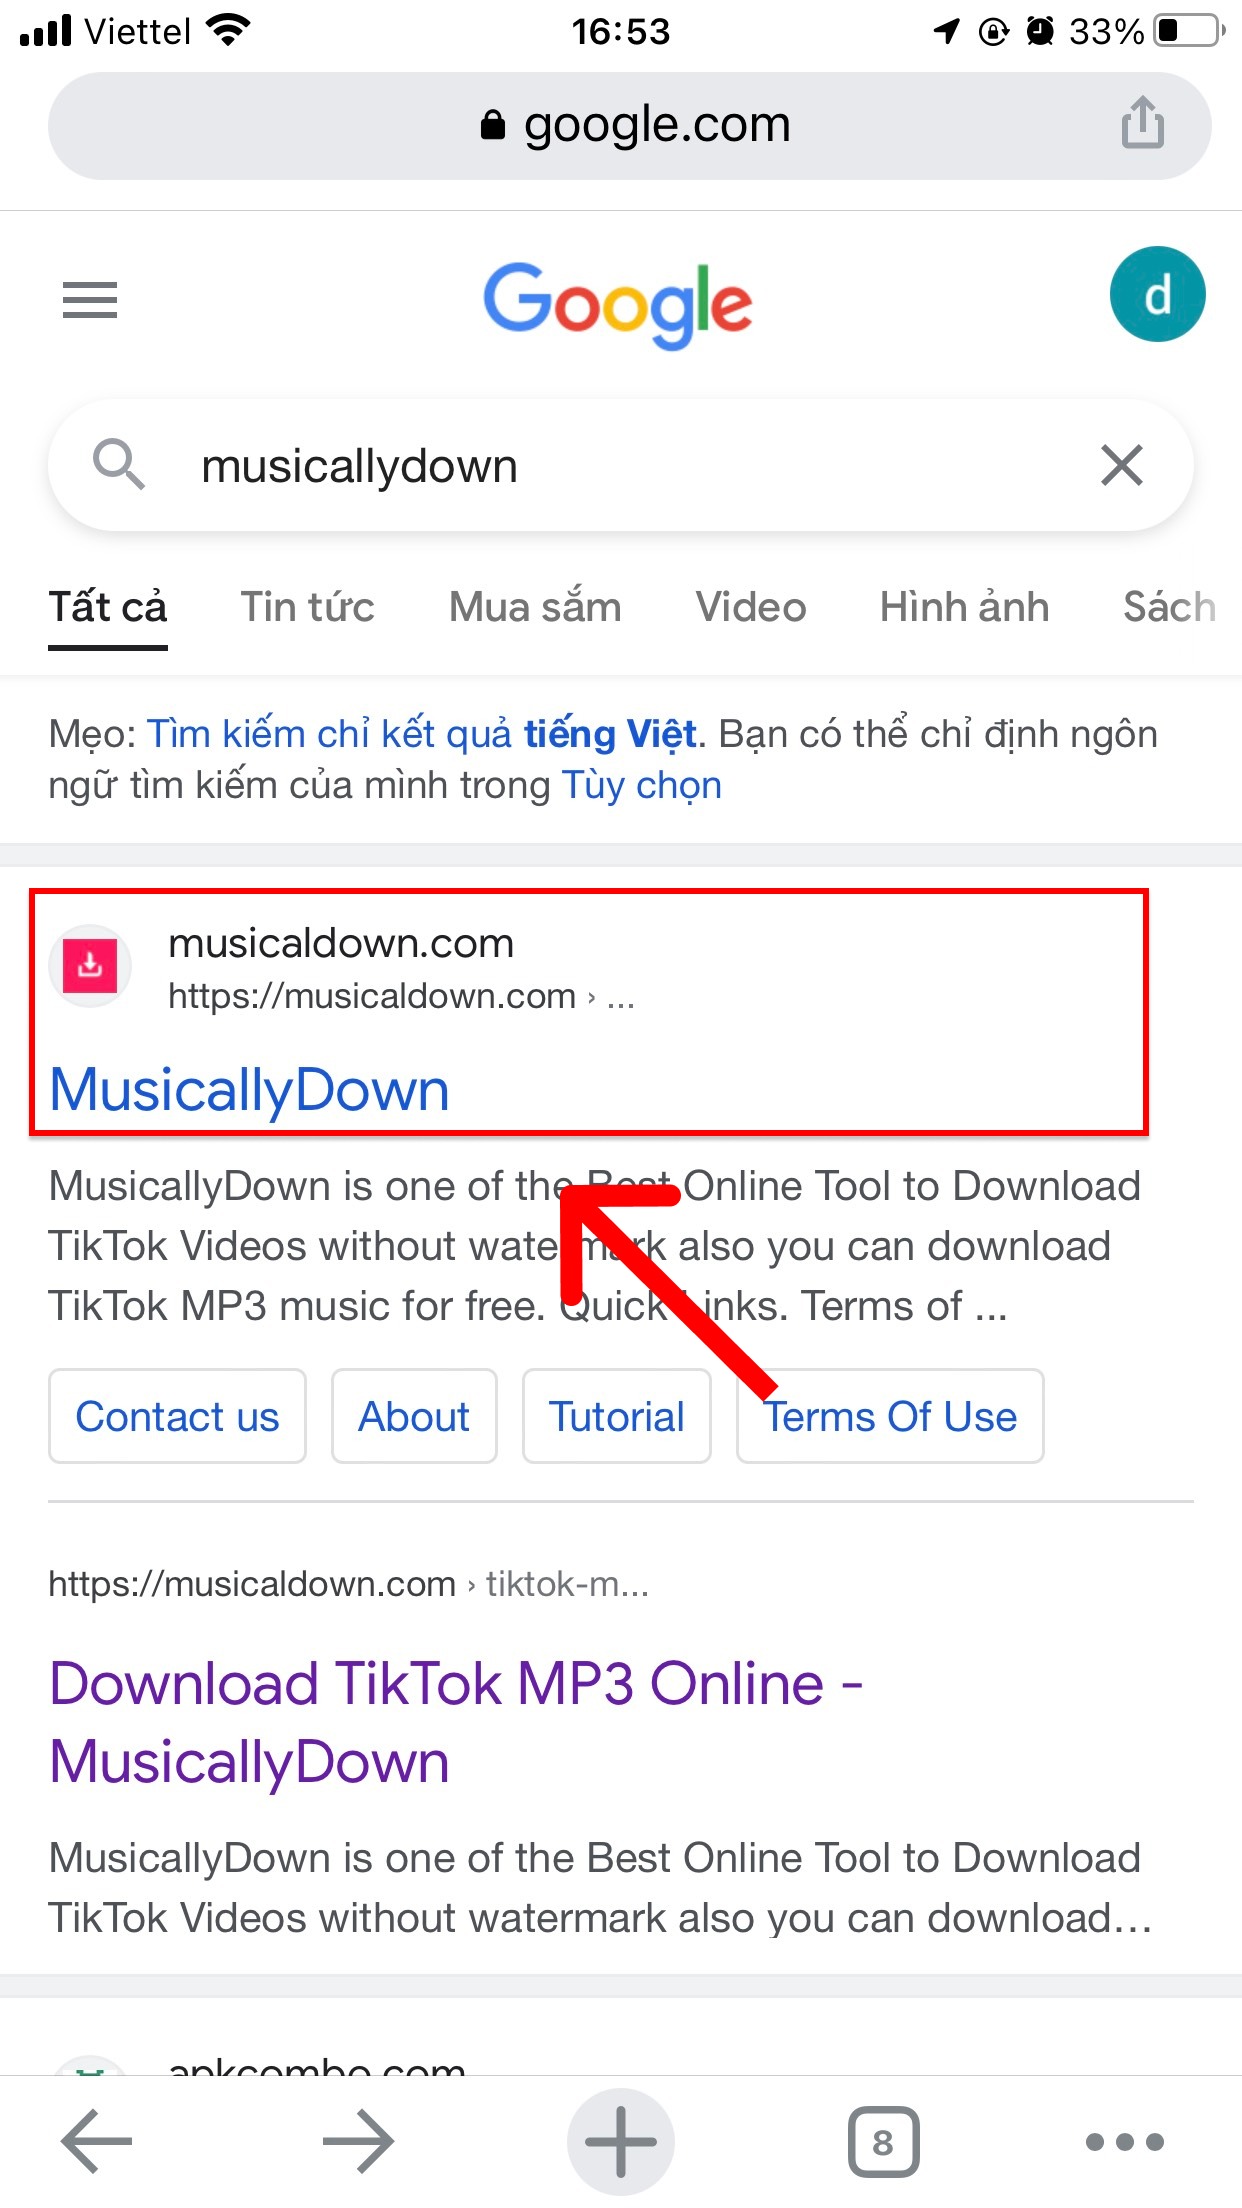 Tải video TikTok Trung Quốc bằng Musical Down